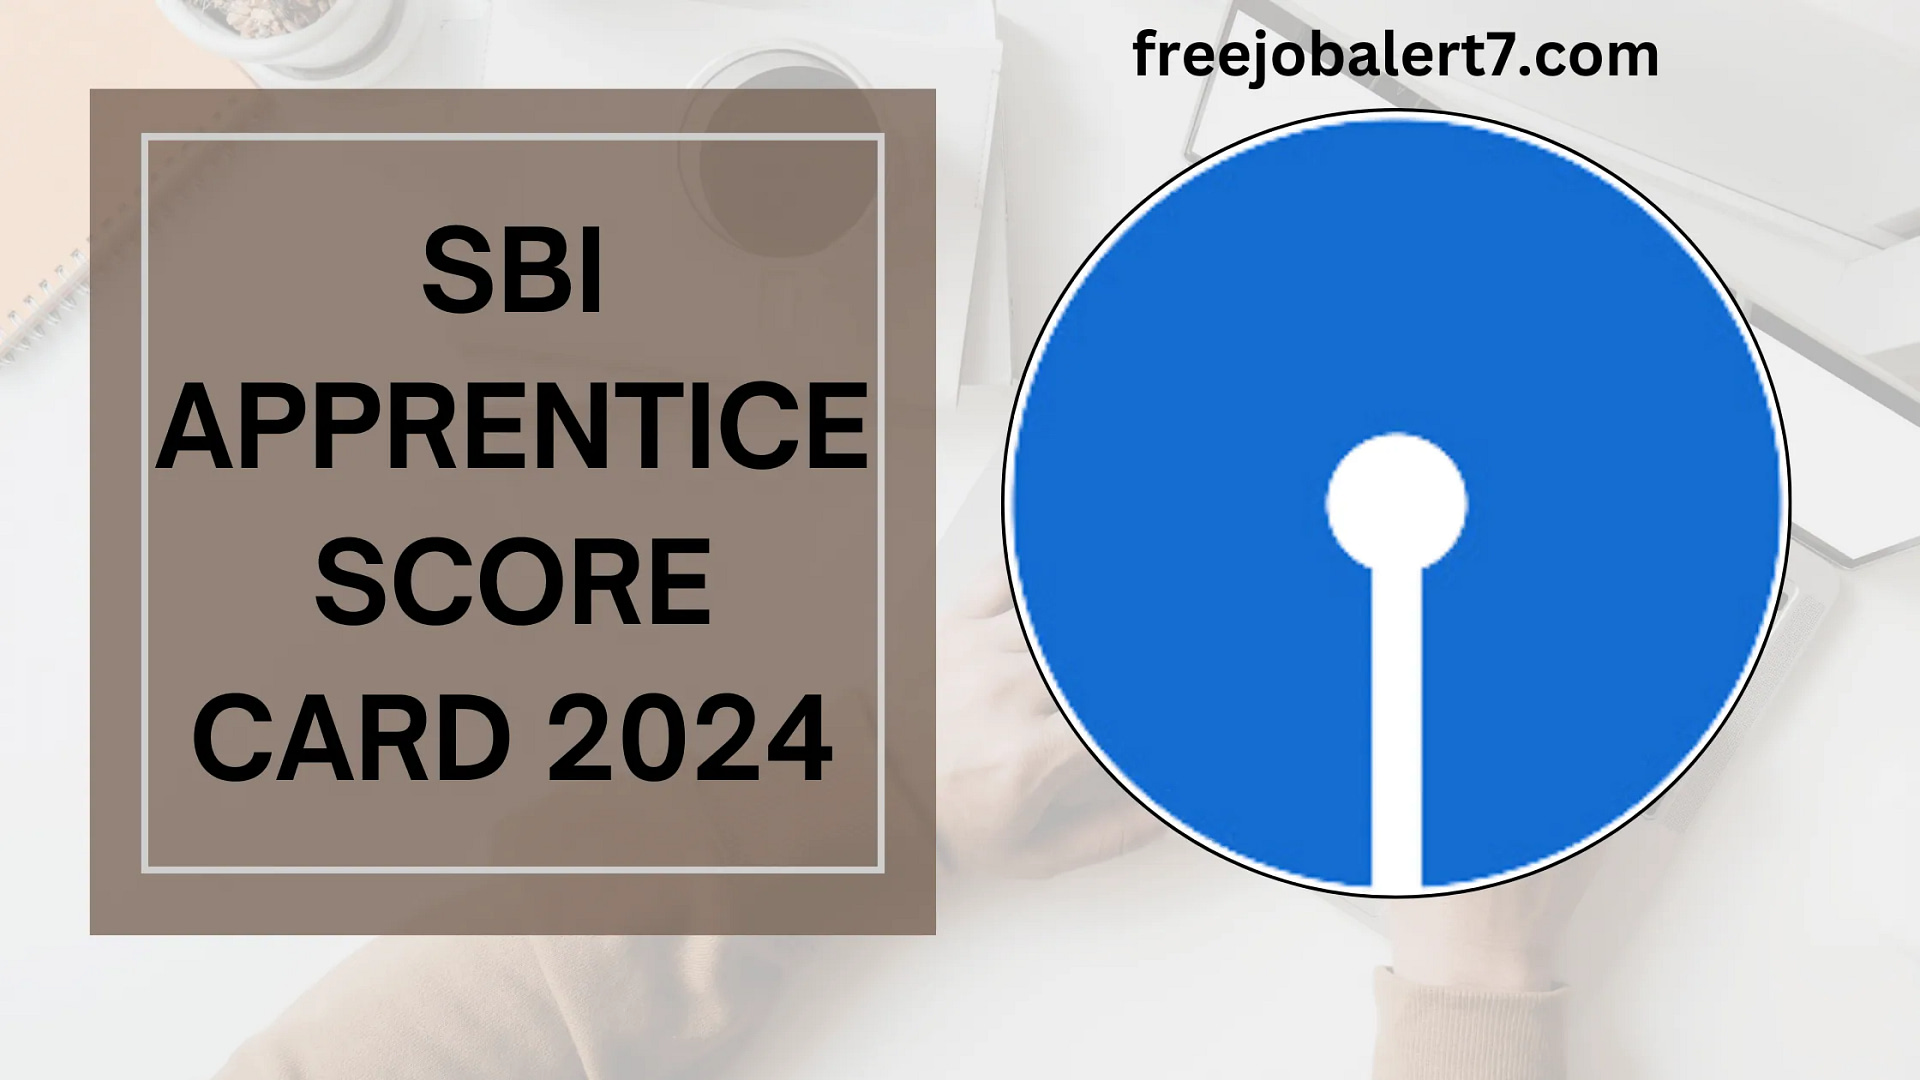 SBI Apprentice Score Card 2024